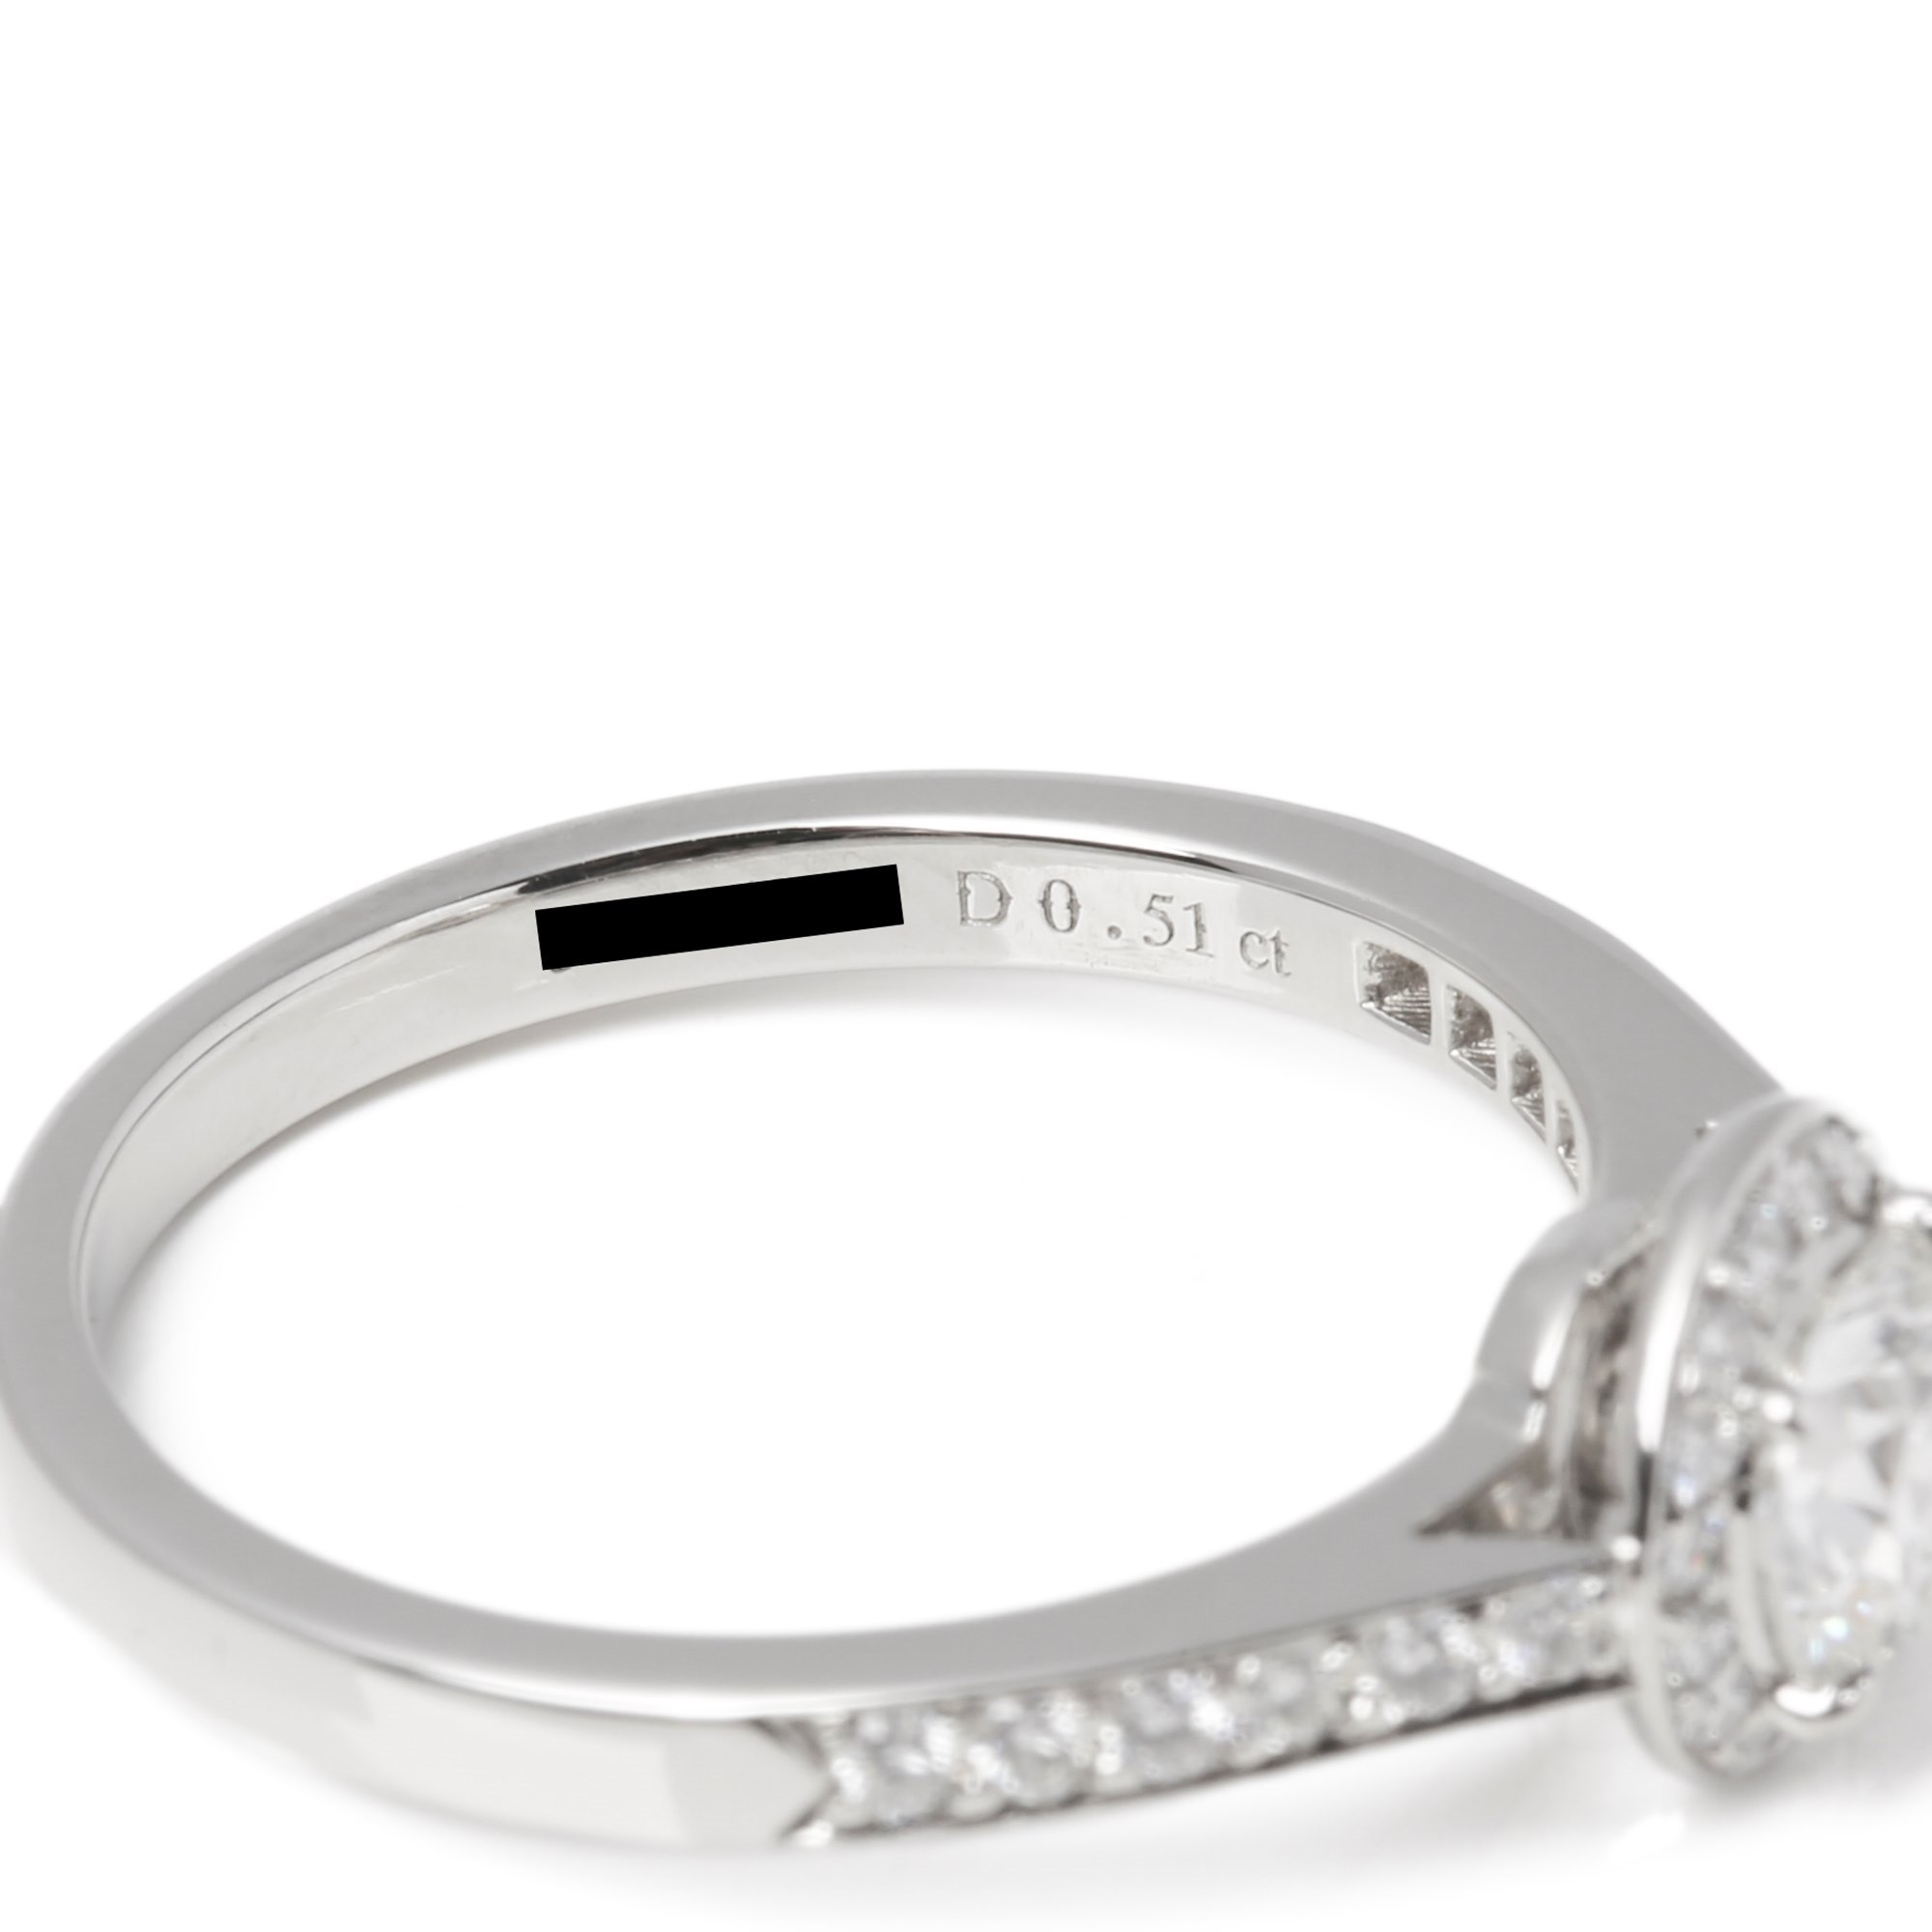 Tiffany & Co. Embrace Halo Diamond Ring